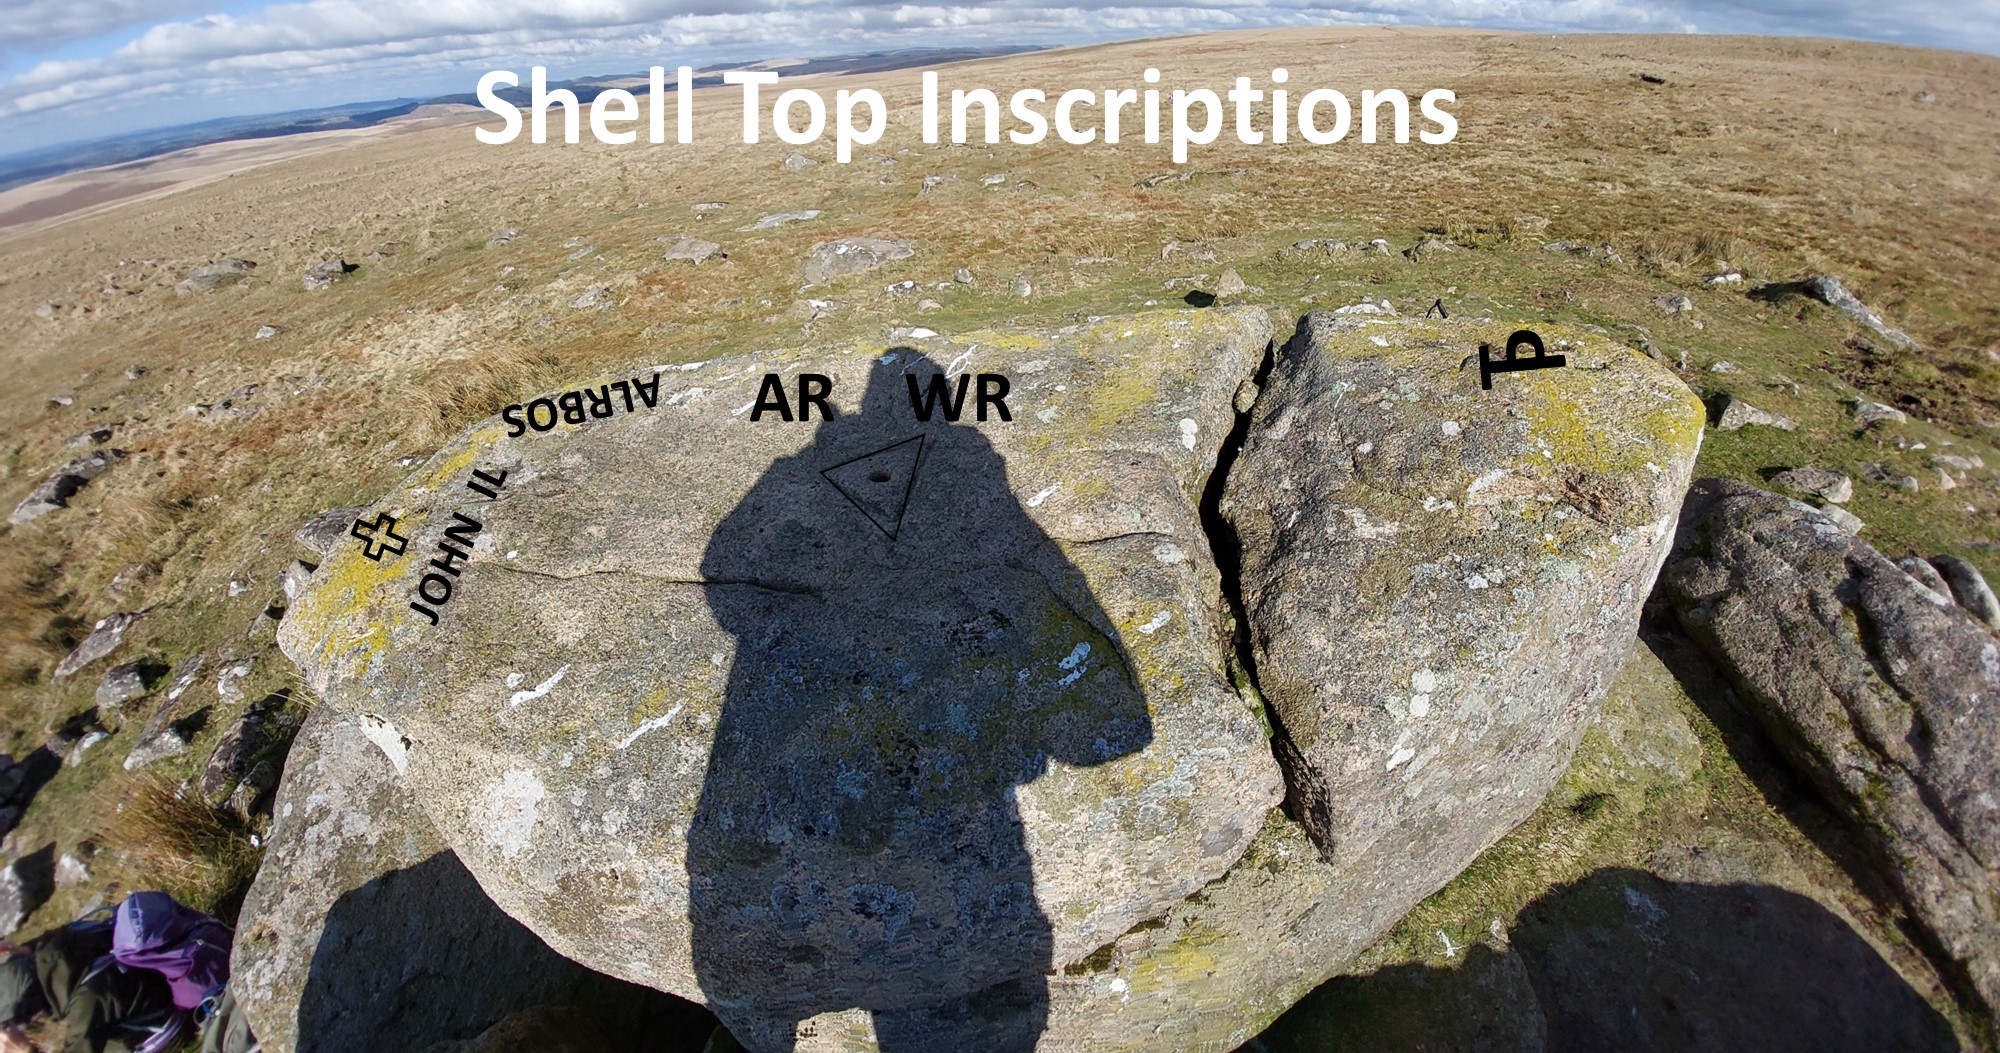 0. Shell Top Inscriptions